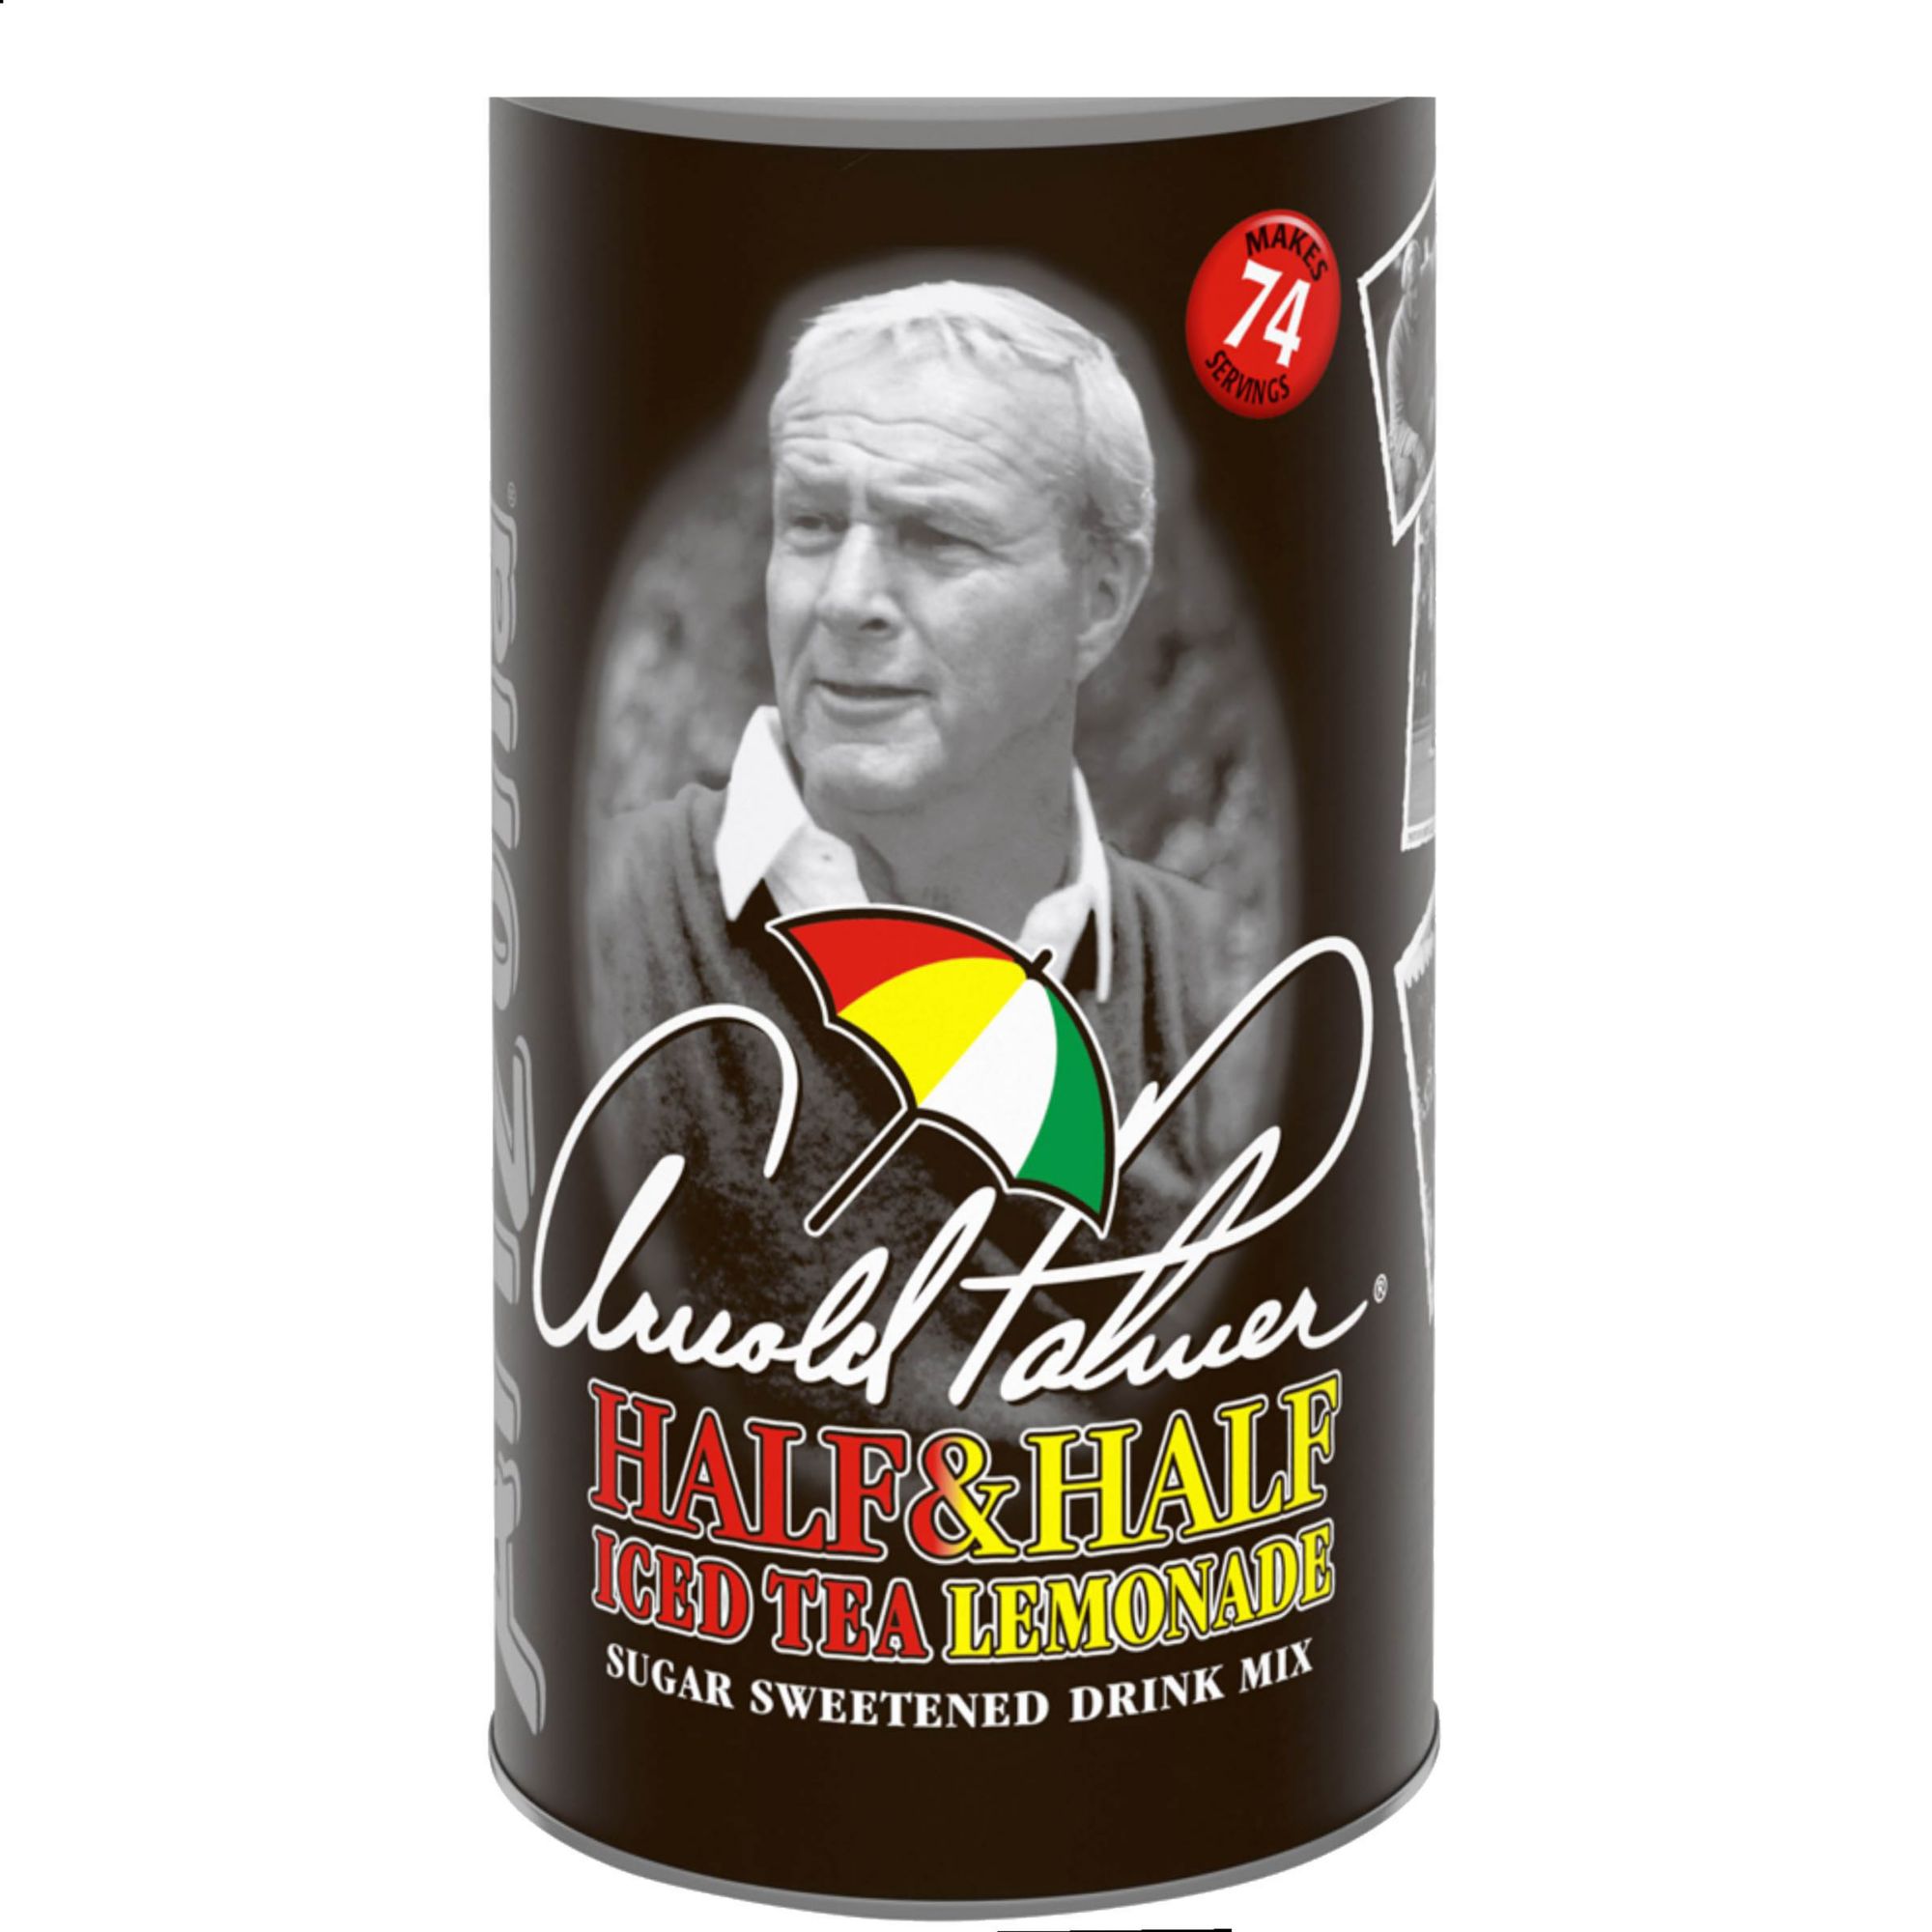 Arizona Arnold Palmer Half and Half Iced Tea and Lemonade Mix, 73 oz.